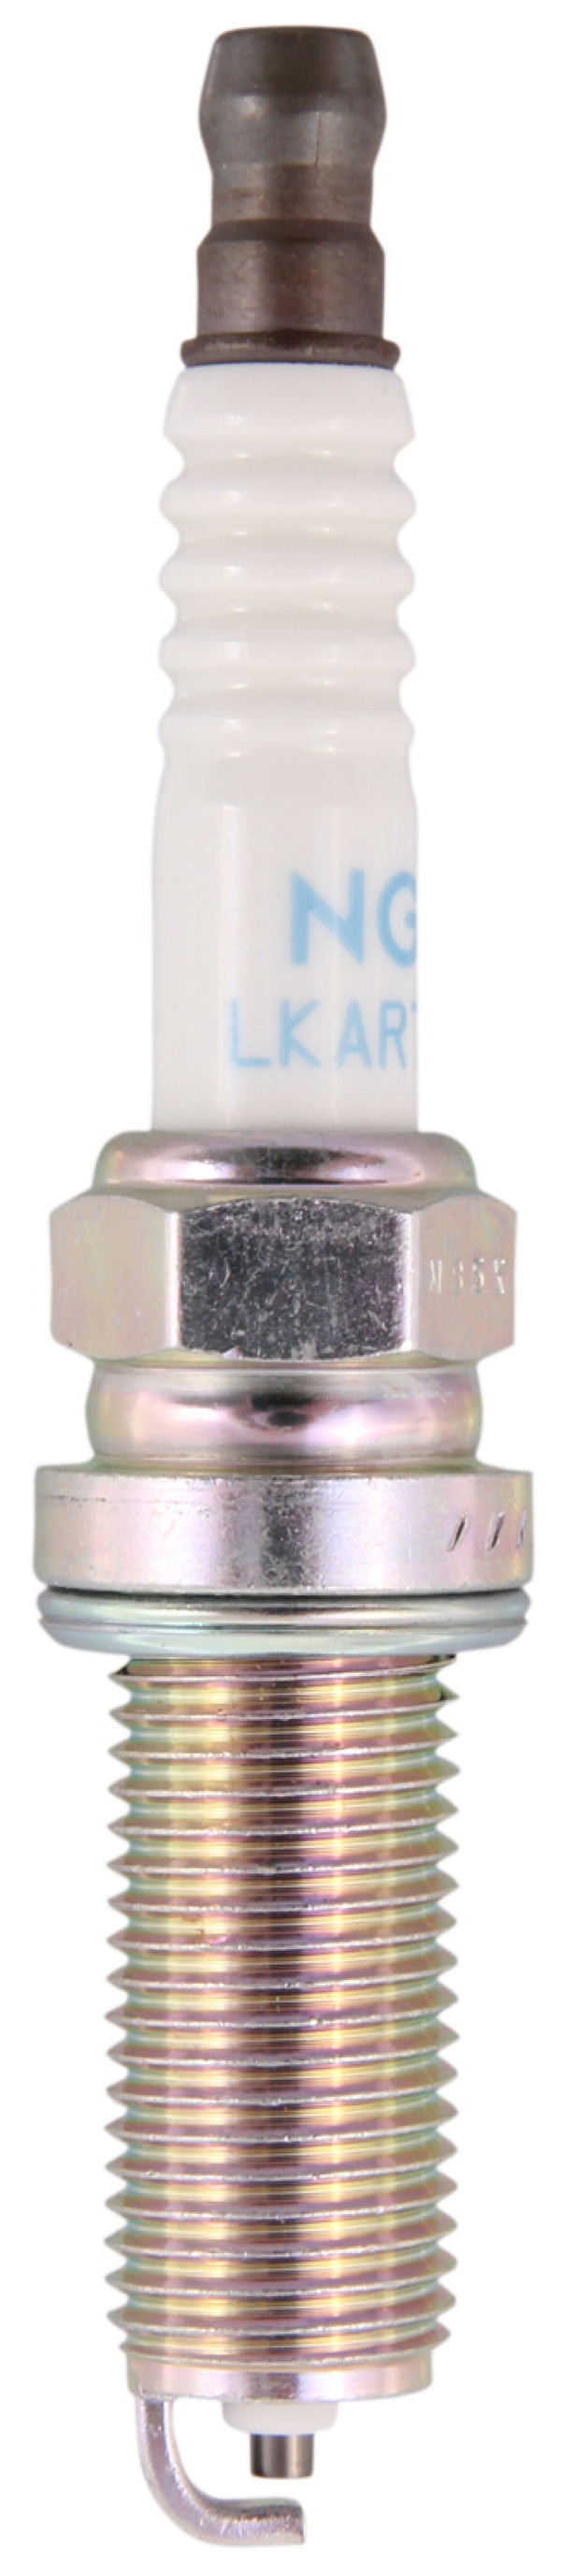 NGK Standard Spark Plug Box of 4 (LKAR7C-9) - Premium Spark Plugs from NGK - Just 132.66 SR! Shop now at Motors